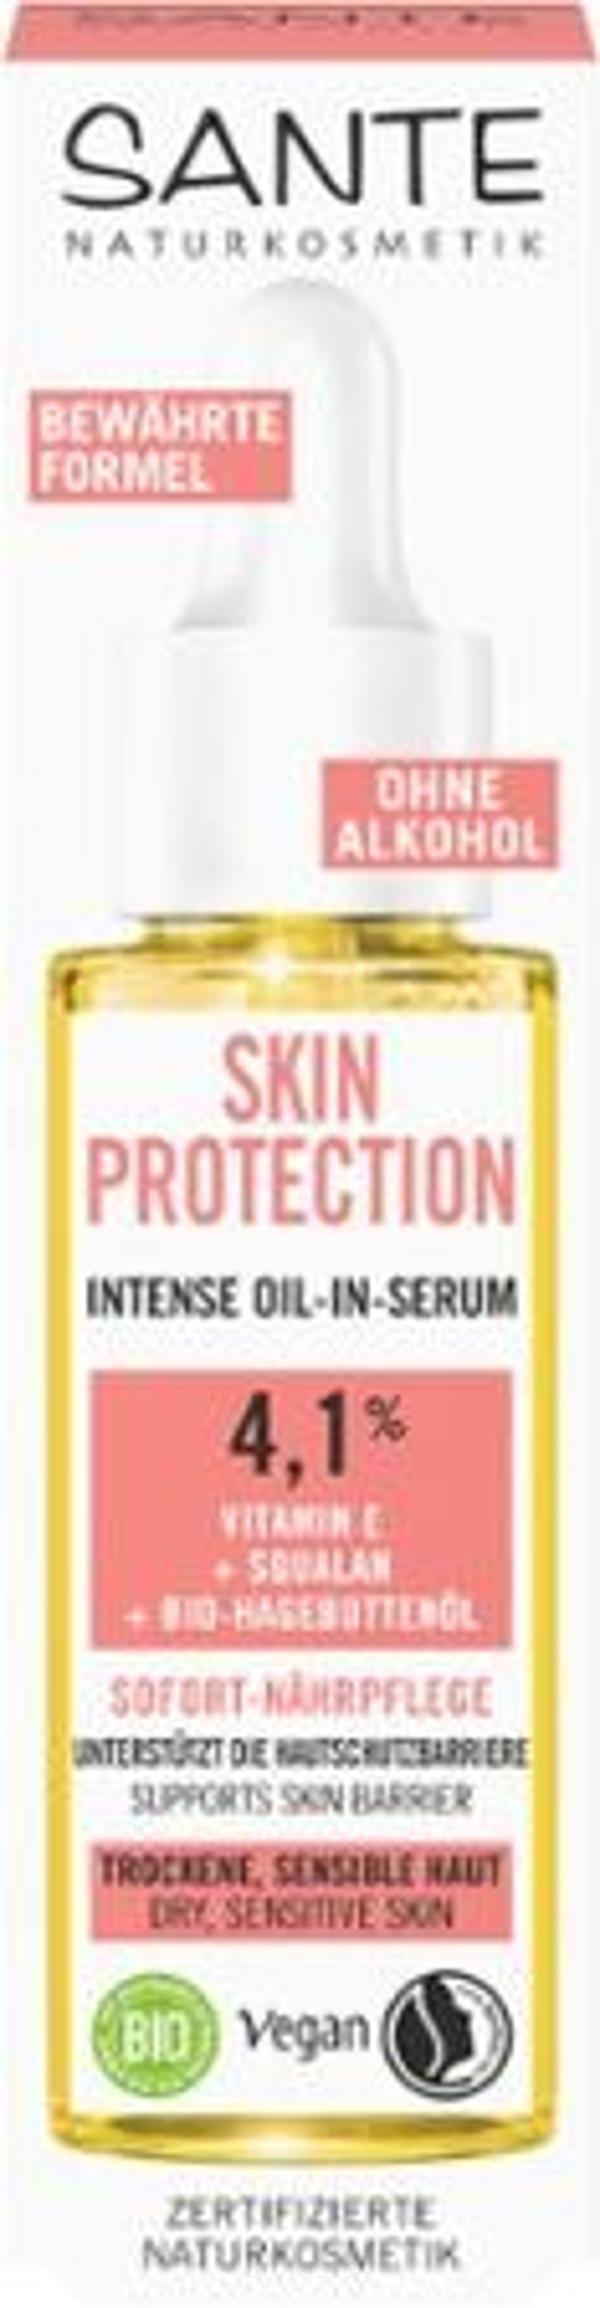 Produktfoto zu Skin Protection Intense Serum